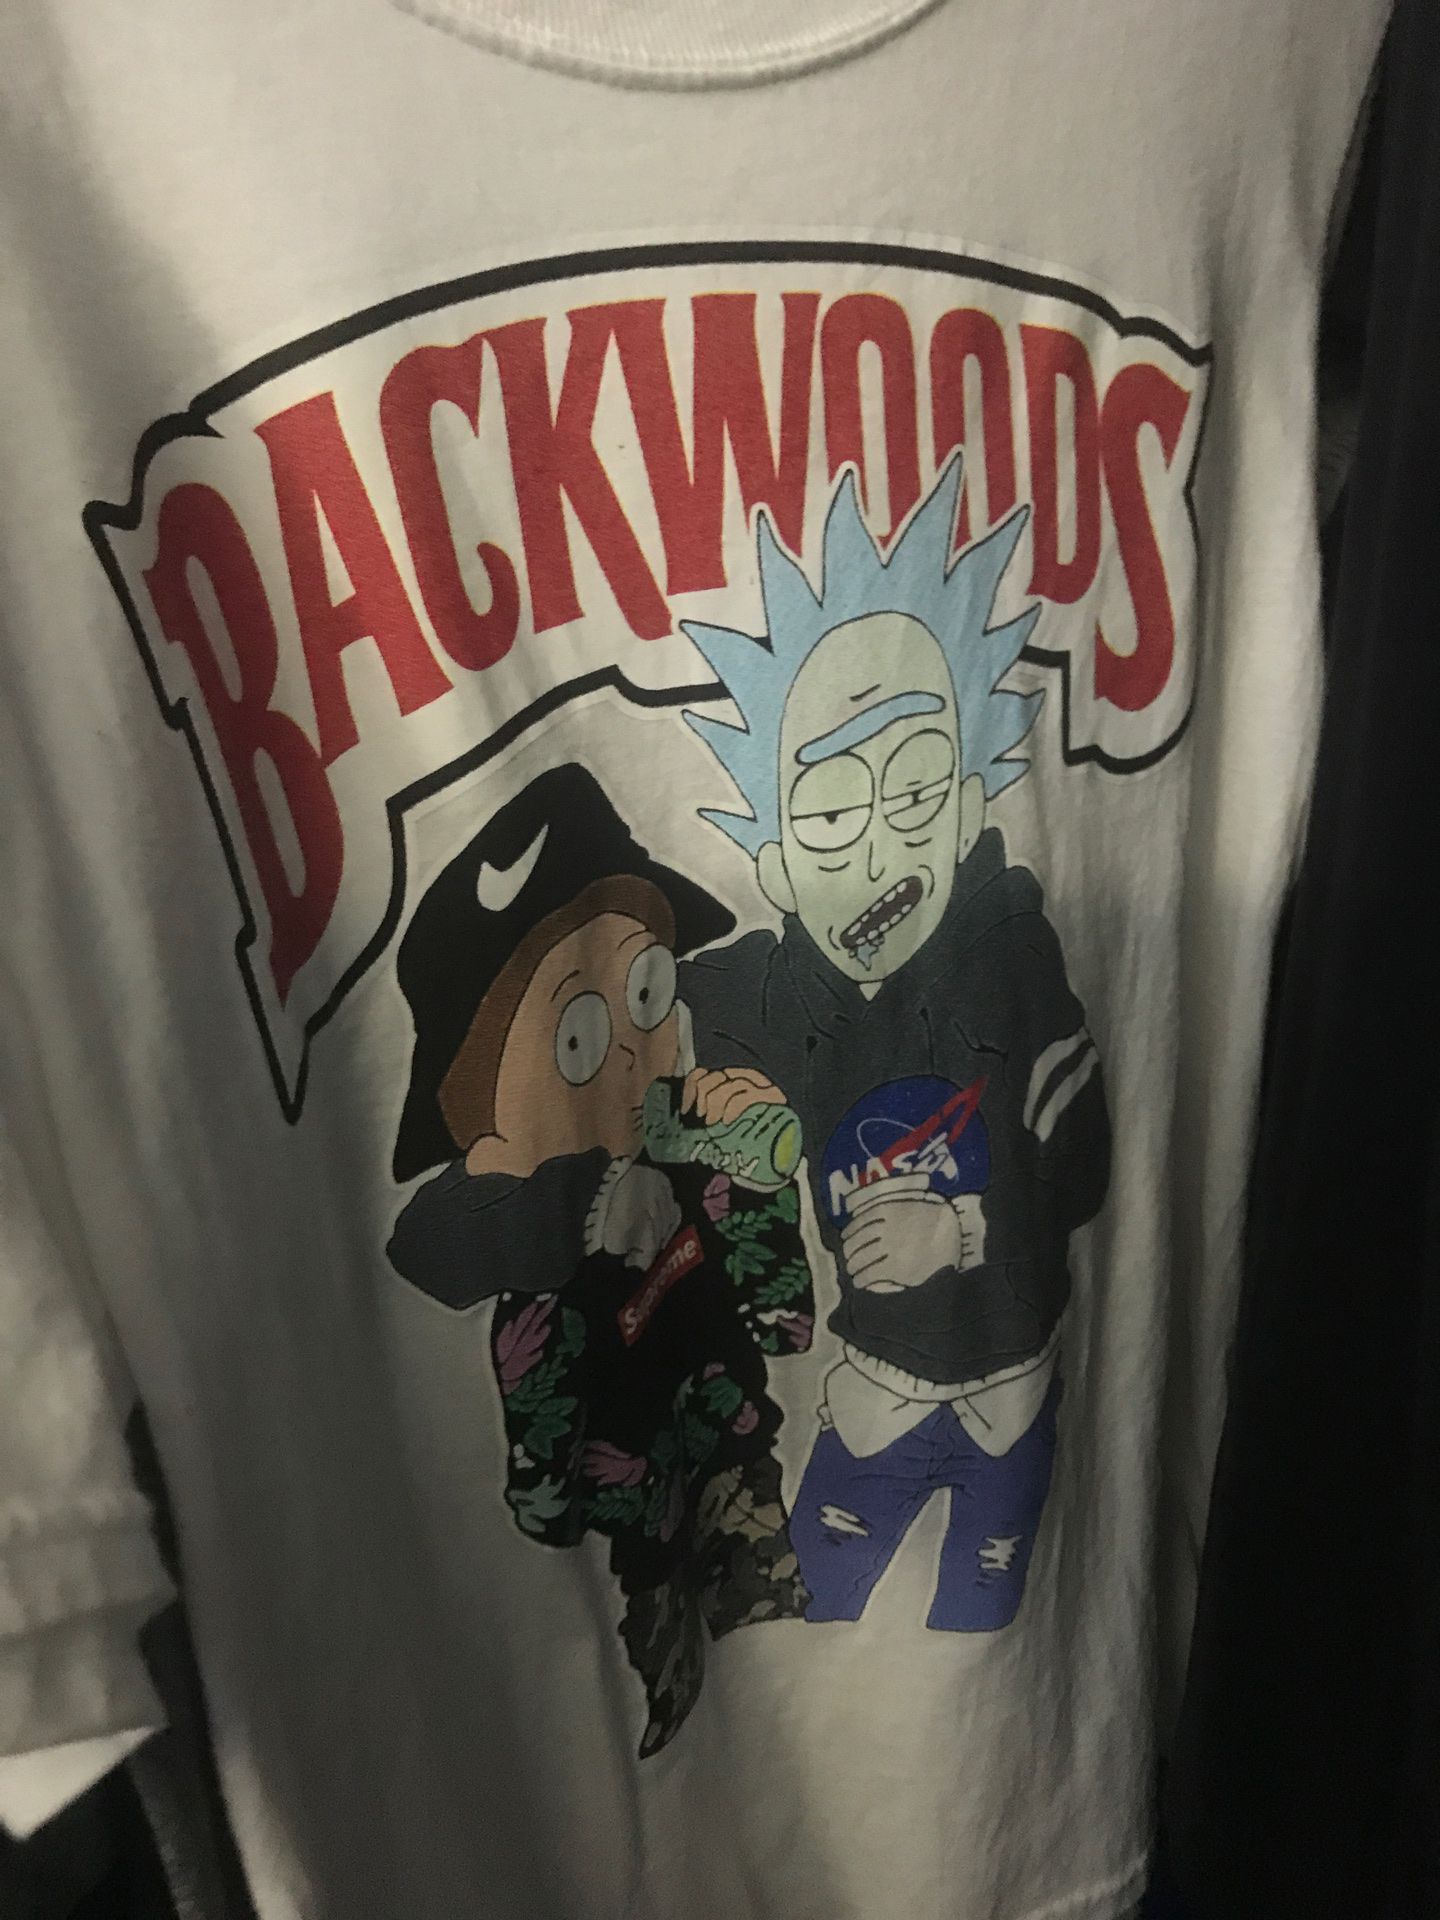 Backwoods rick and morty tee shirt